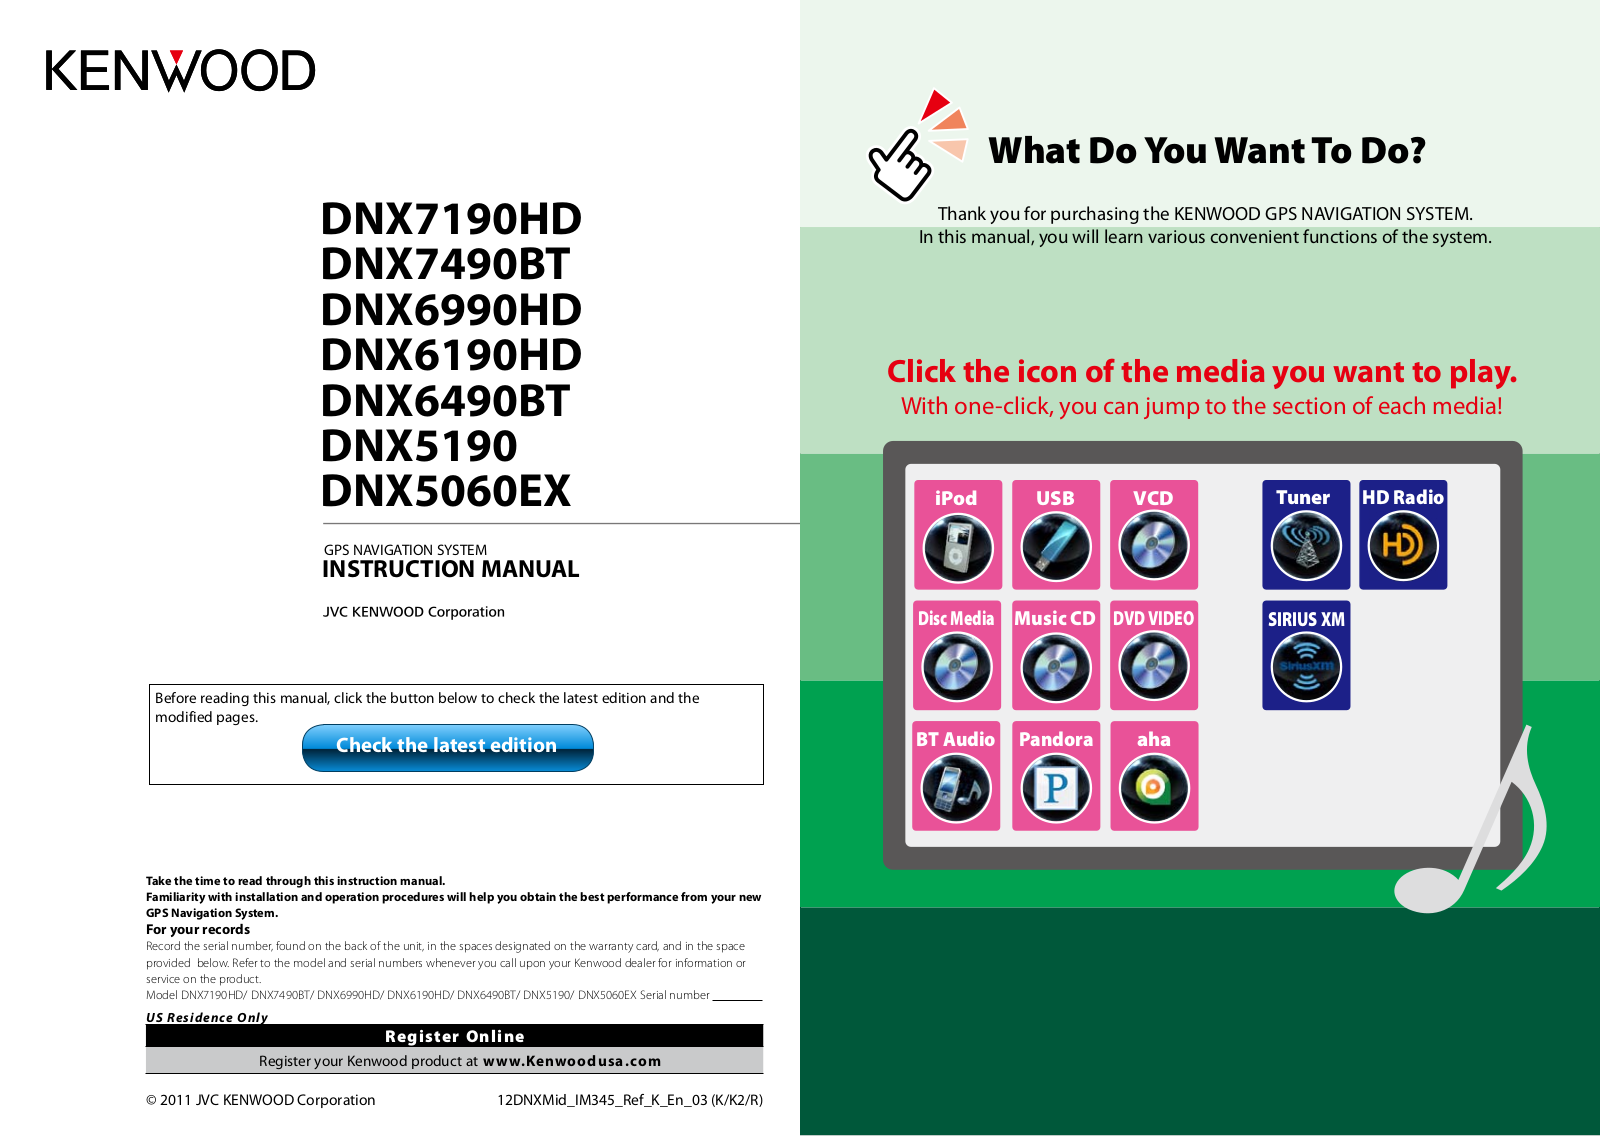 Kenwood DNX5060EX, DNX5190, DNX6190HD, DNX6490BT, DNX6990HD Instruction Manual